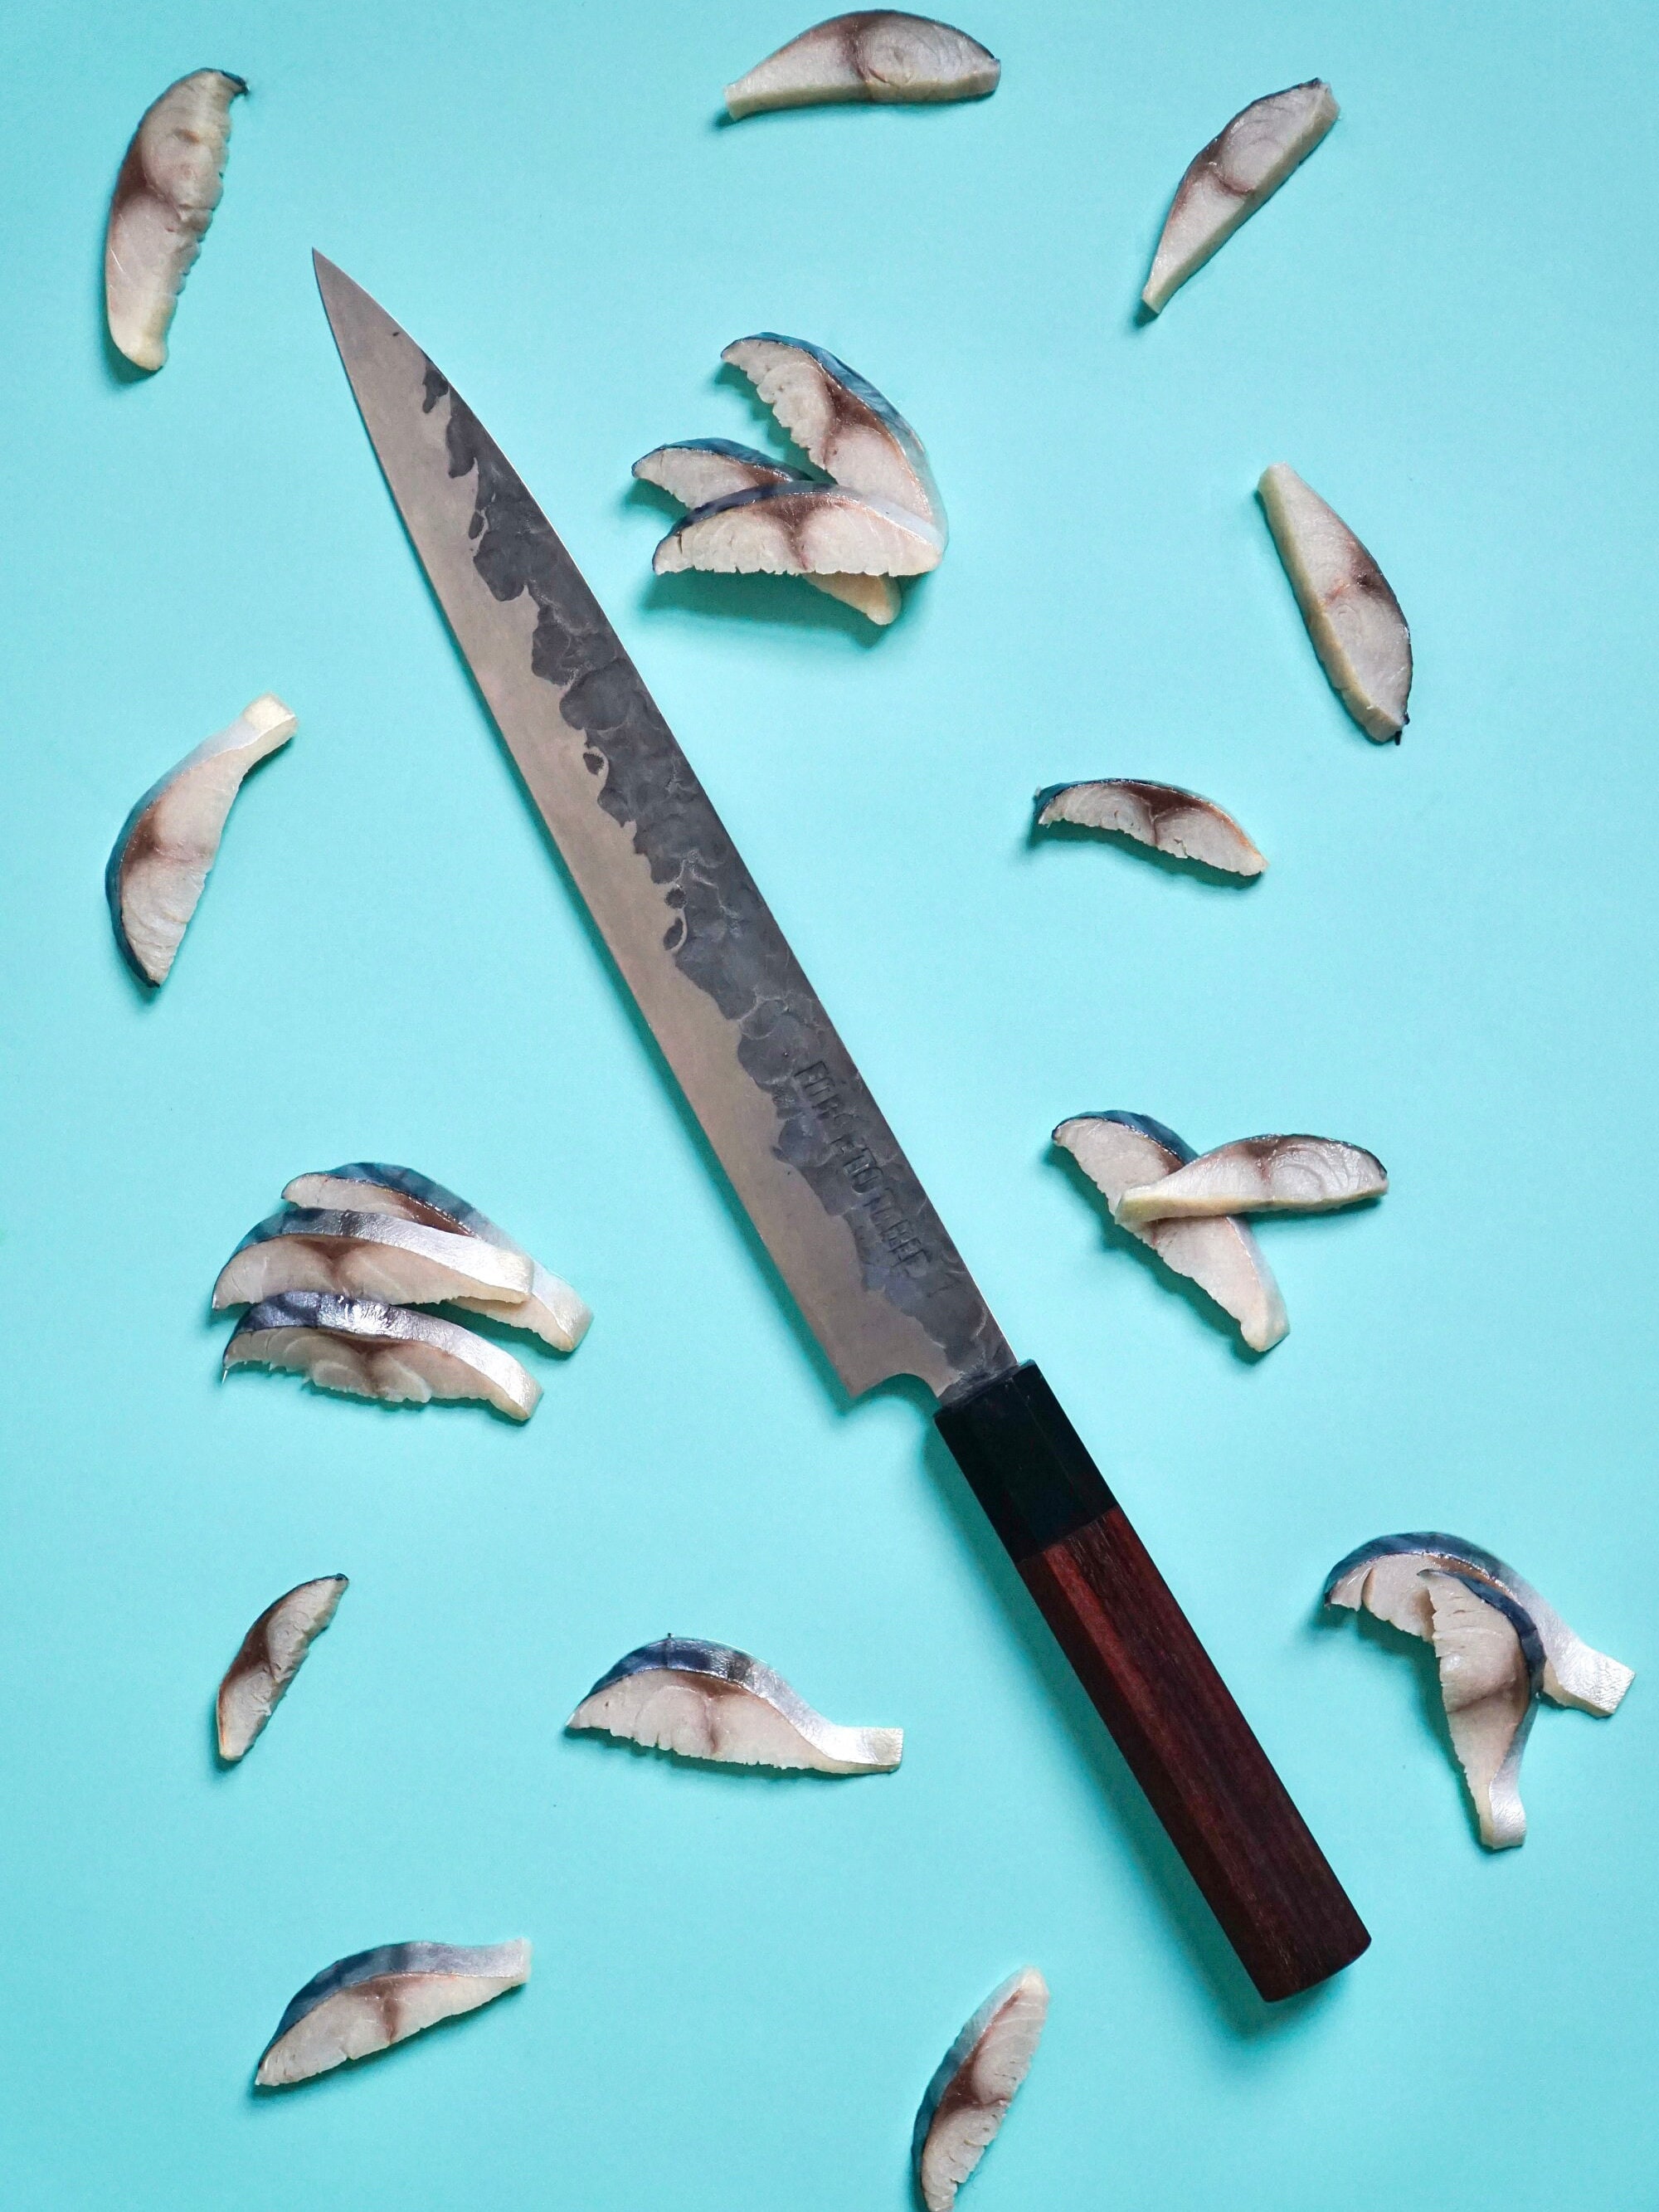 The 7 Best Japanese Sujihiki Slicing Knives in 2020